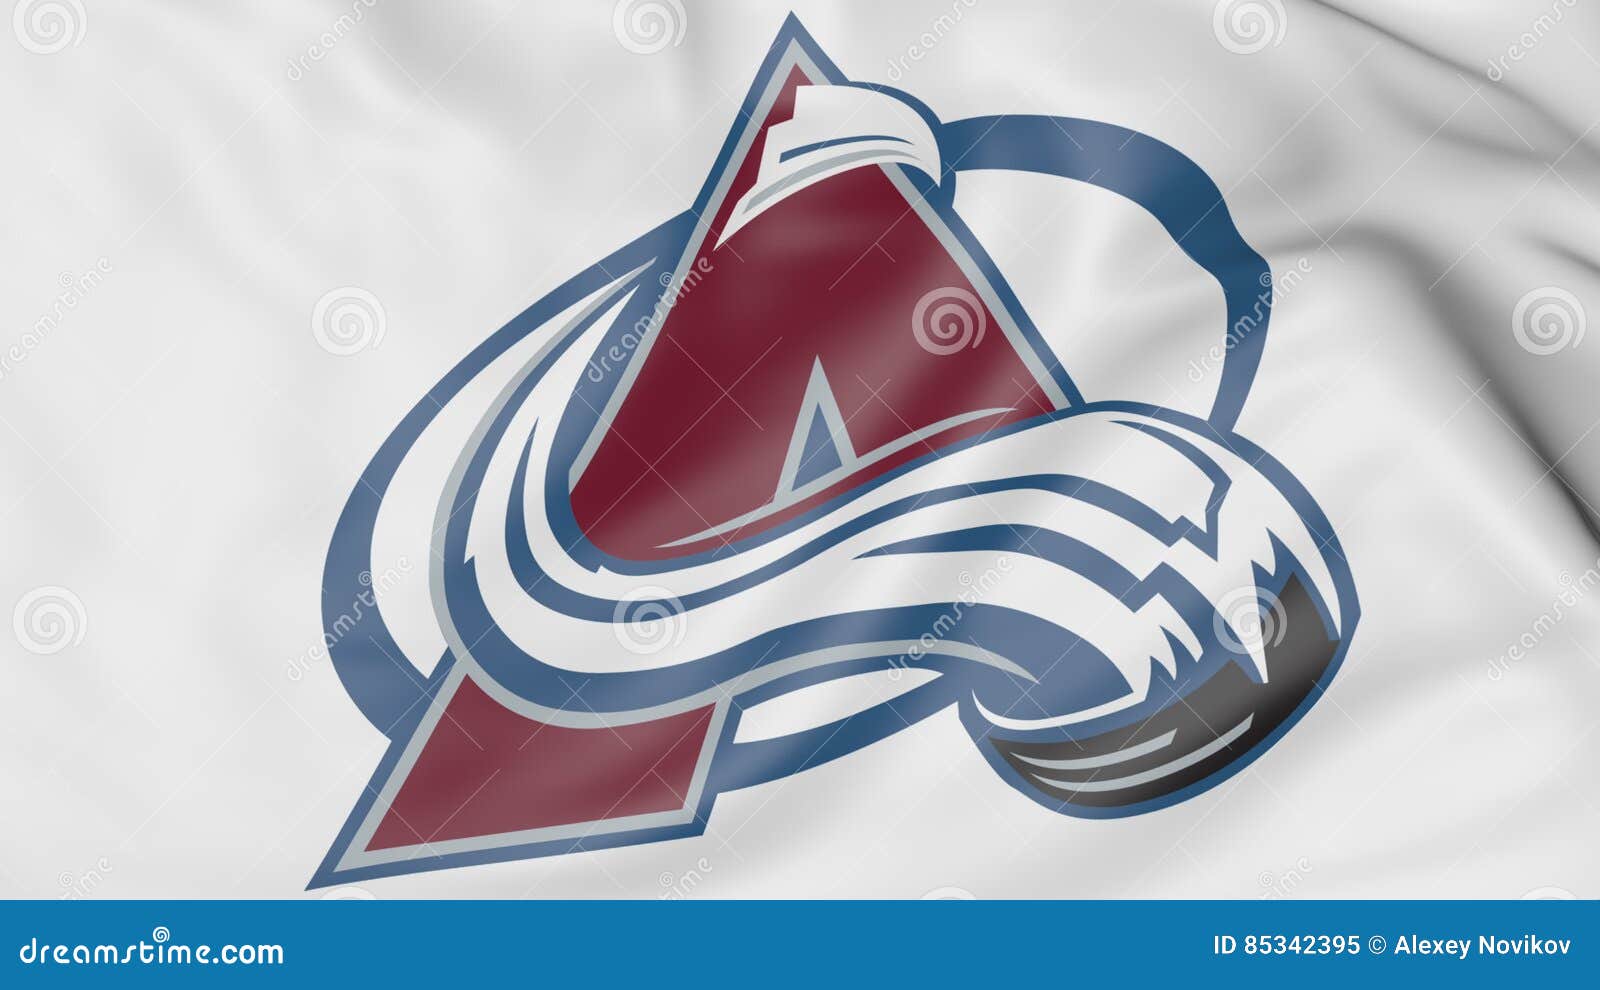 Close-up of waving flag with Colorado Avalanche NHL hockey team